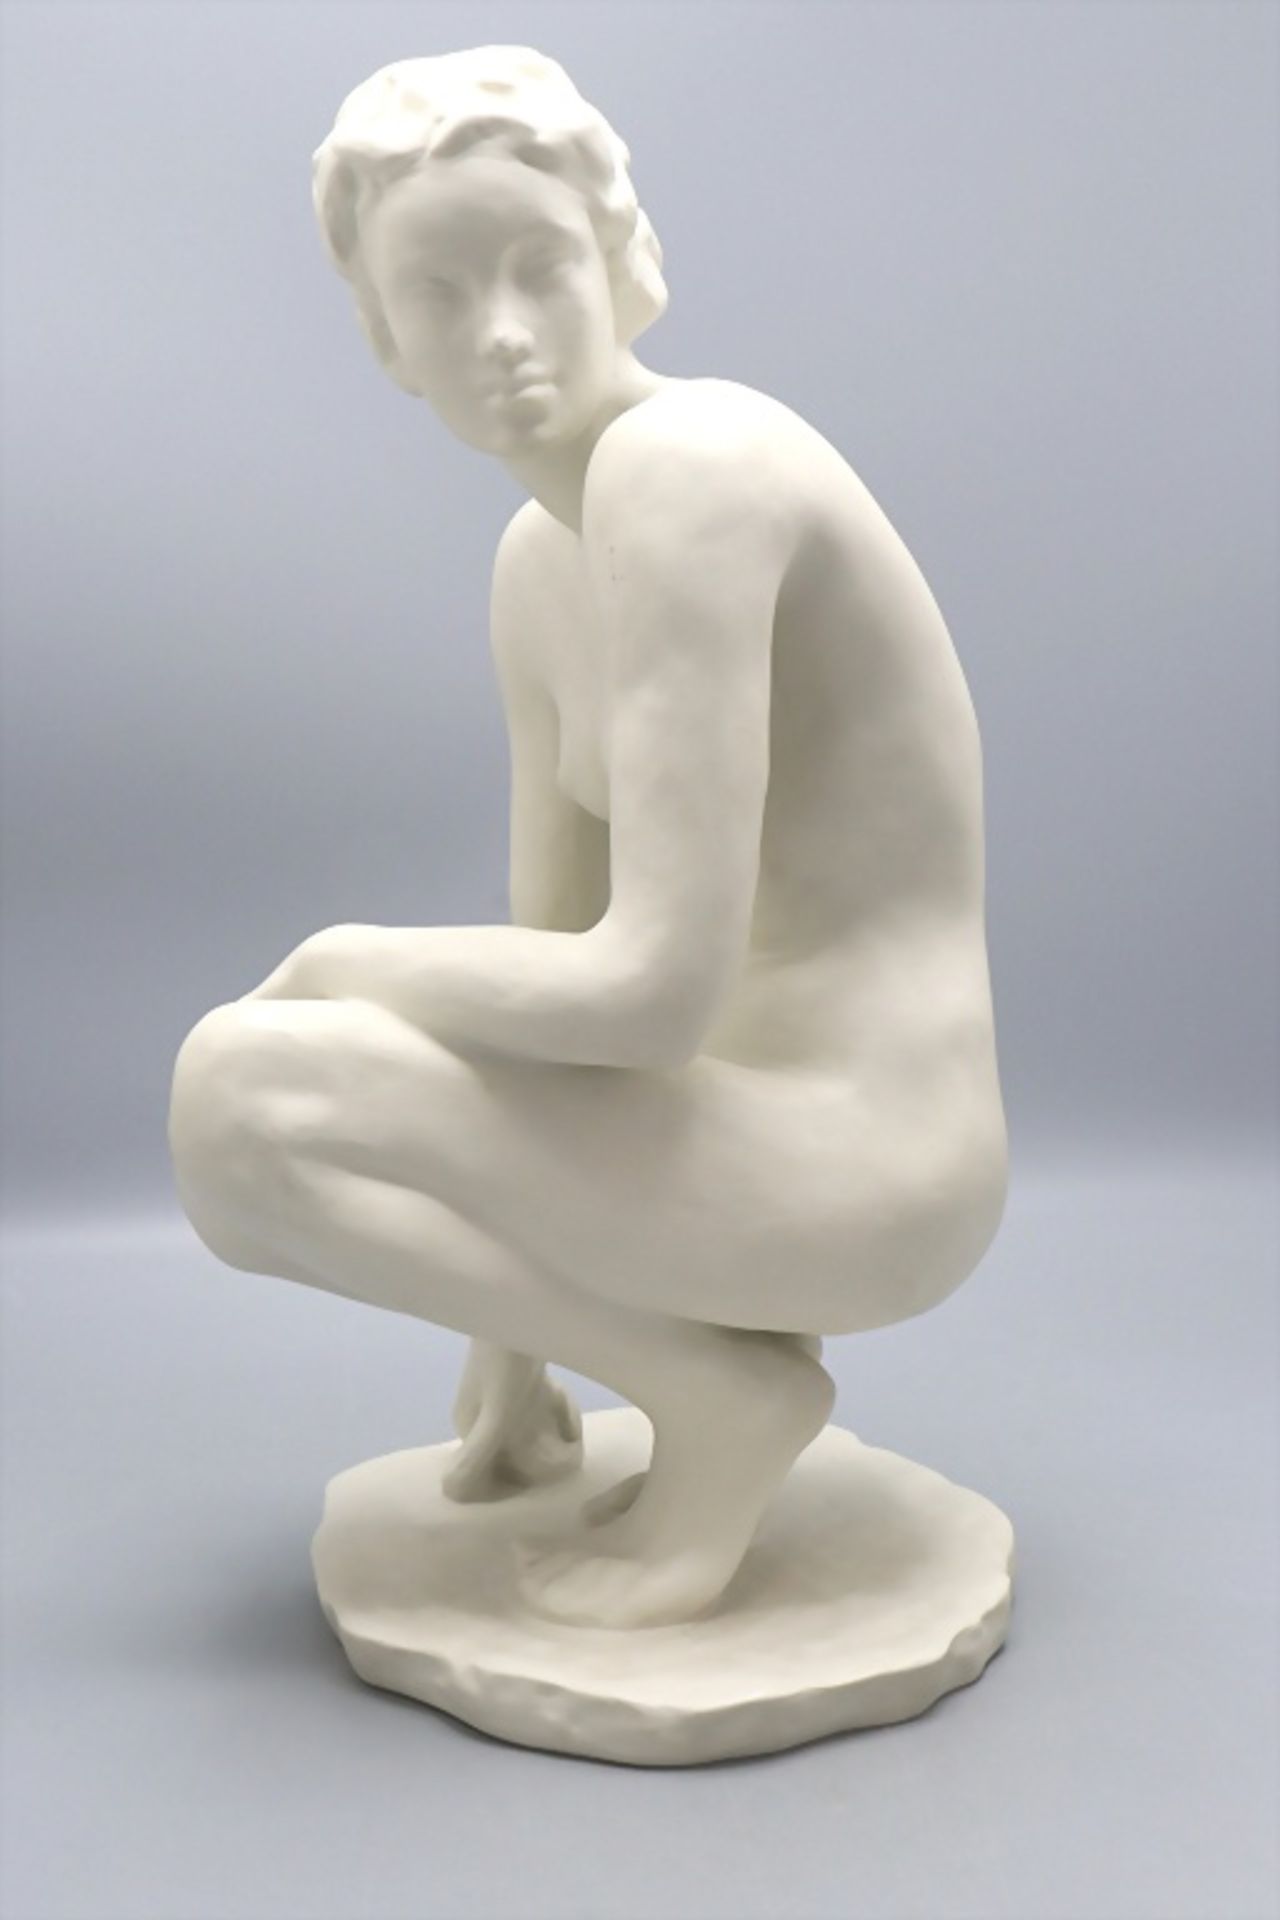 Porzellanfigur 'Die Hockende' / A porcelain figure of 'A crouching woman', Fritz Klimsch, ... - Image 2 of 8